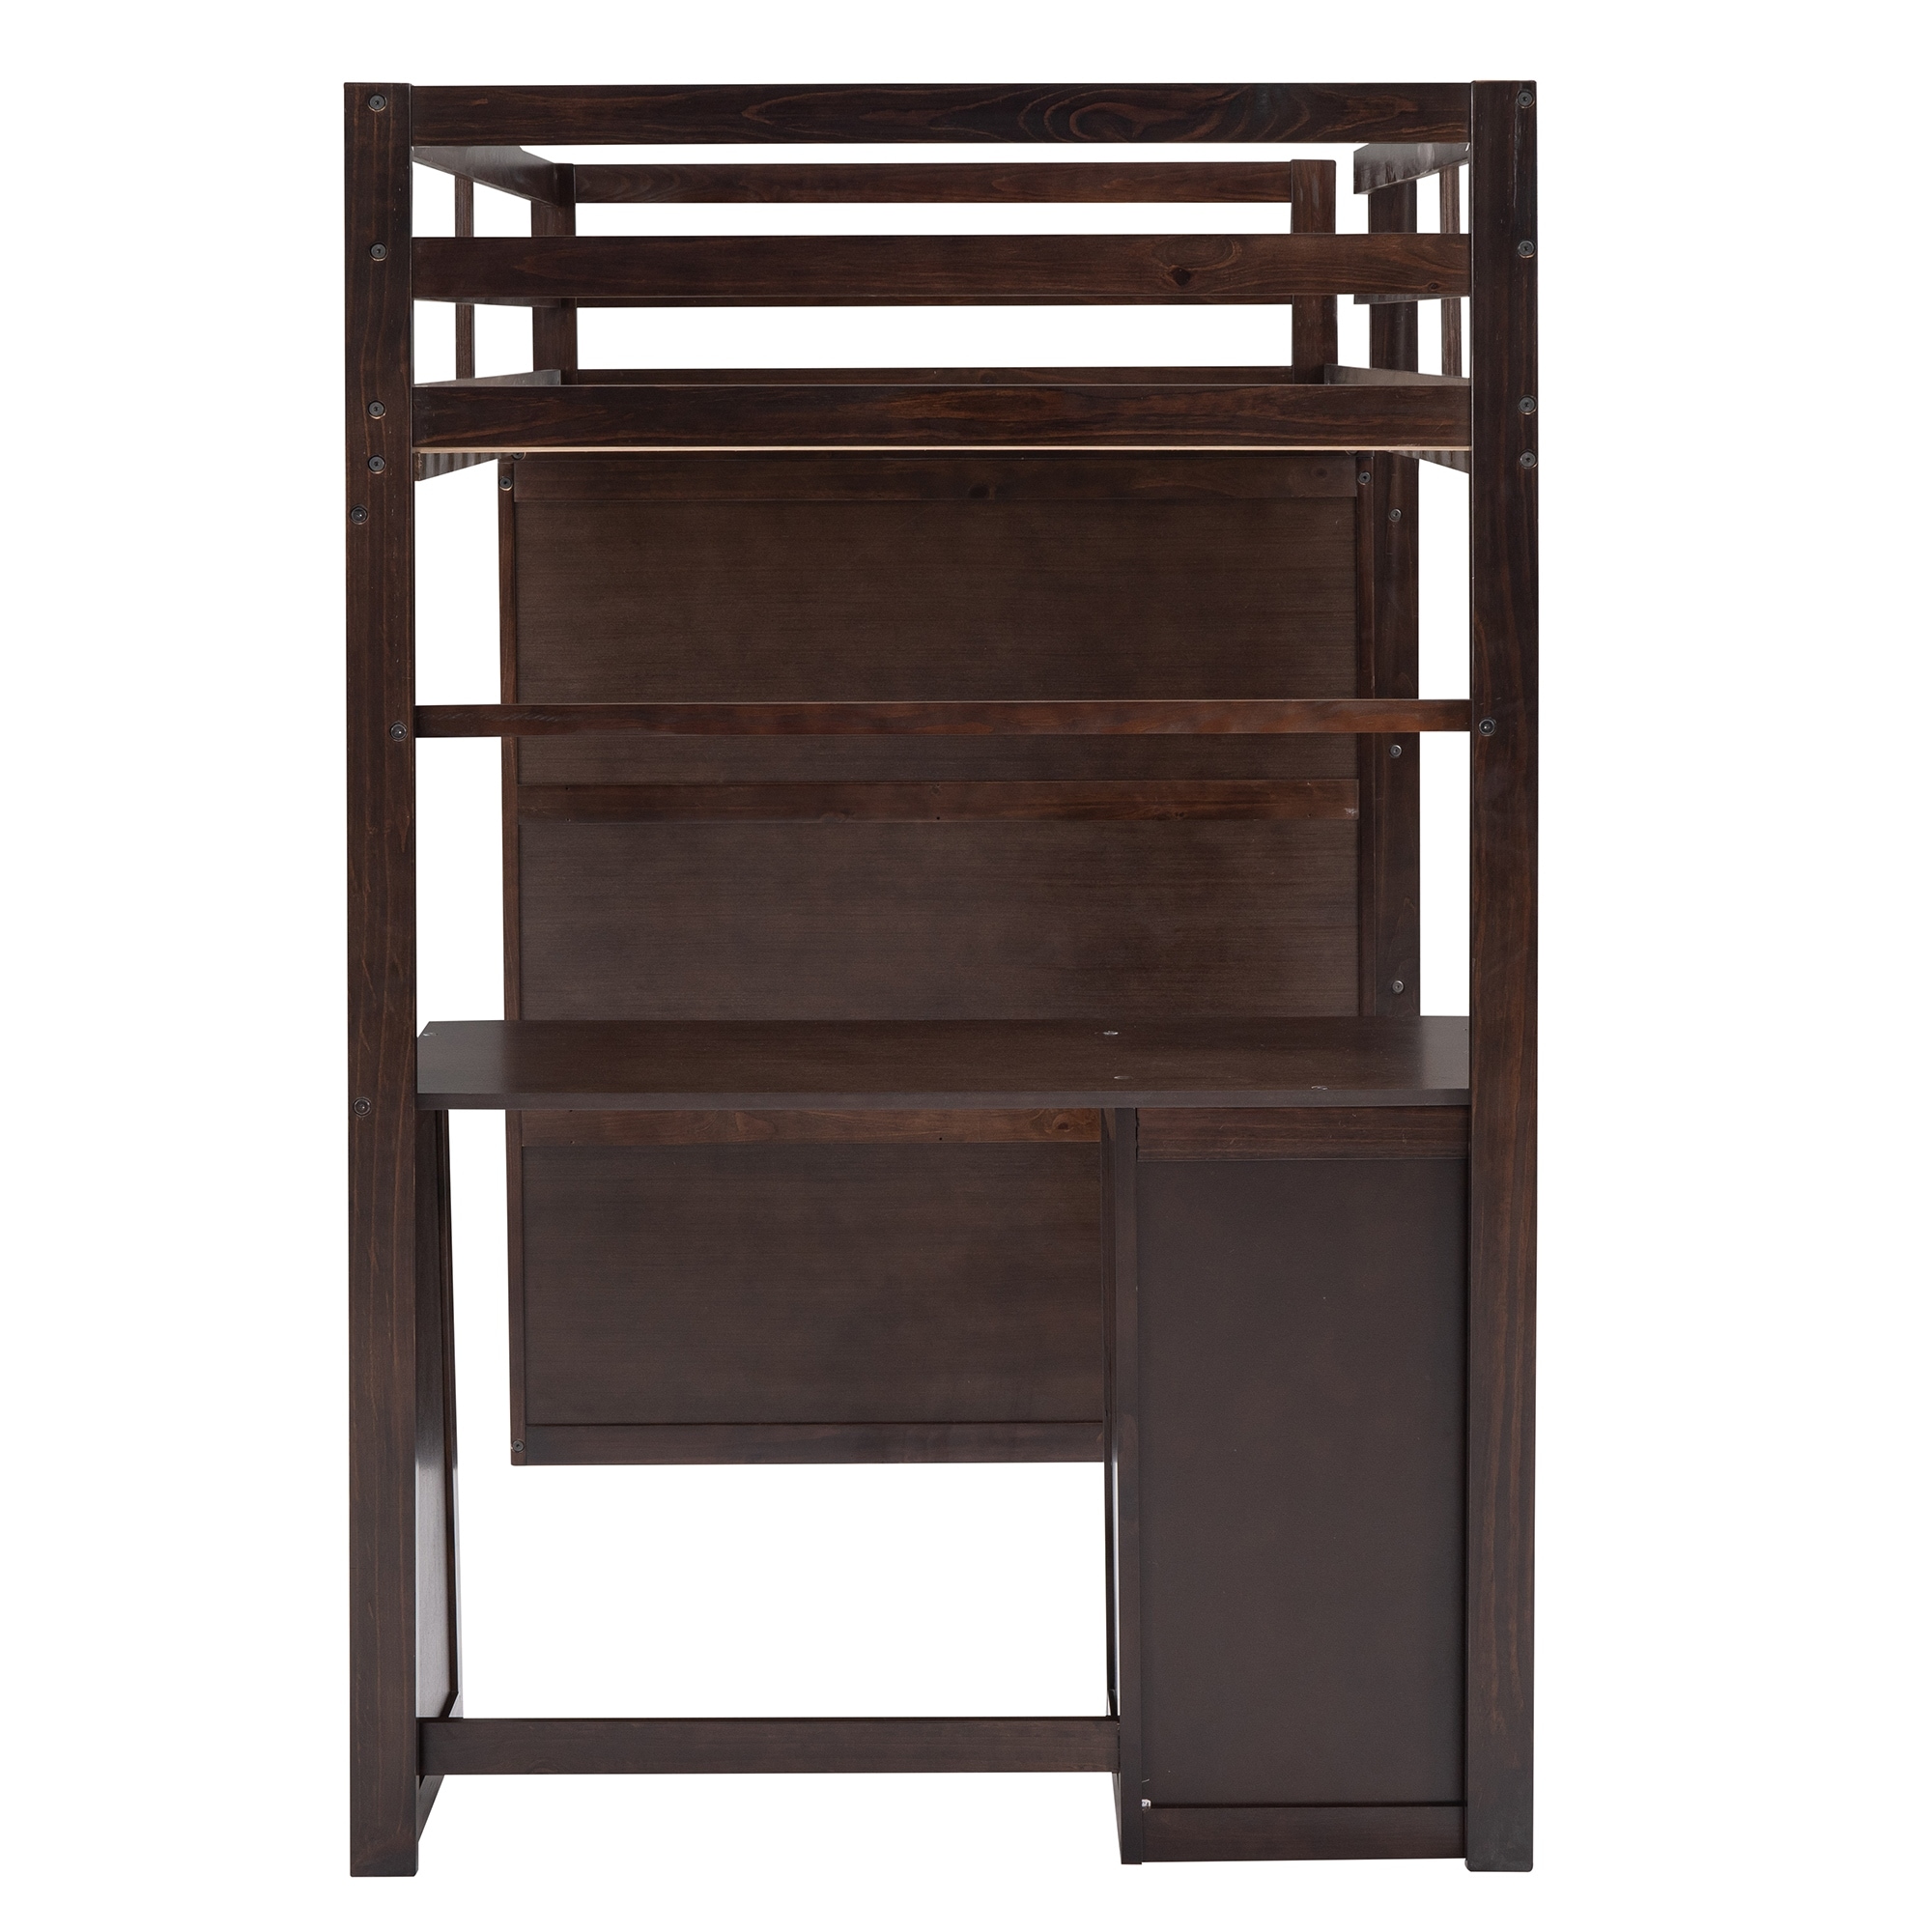 Versatile Wooden Loft Bed with Wardrobes & Desk, Solid Wood Loft Bed Frame with Storage Drawers Cabinet & Guardrail, for Bedroom